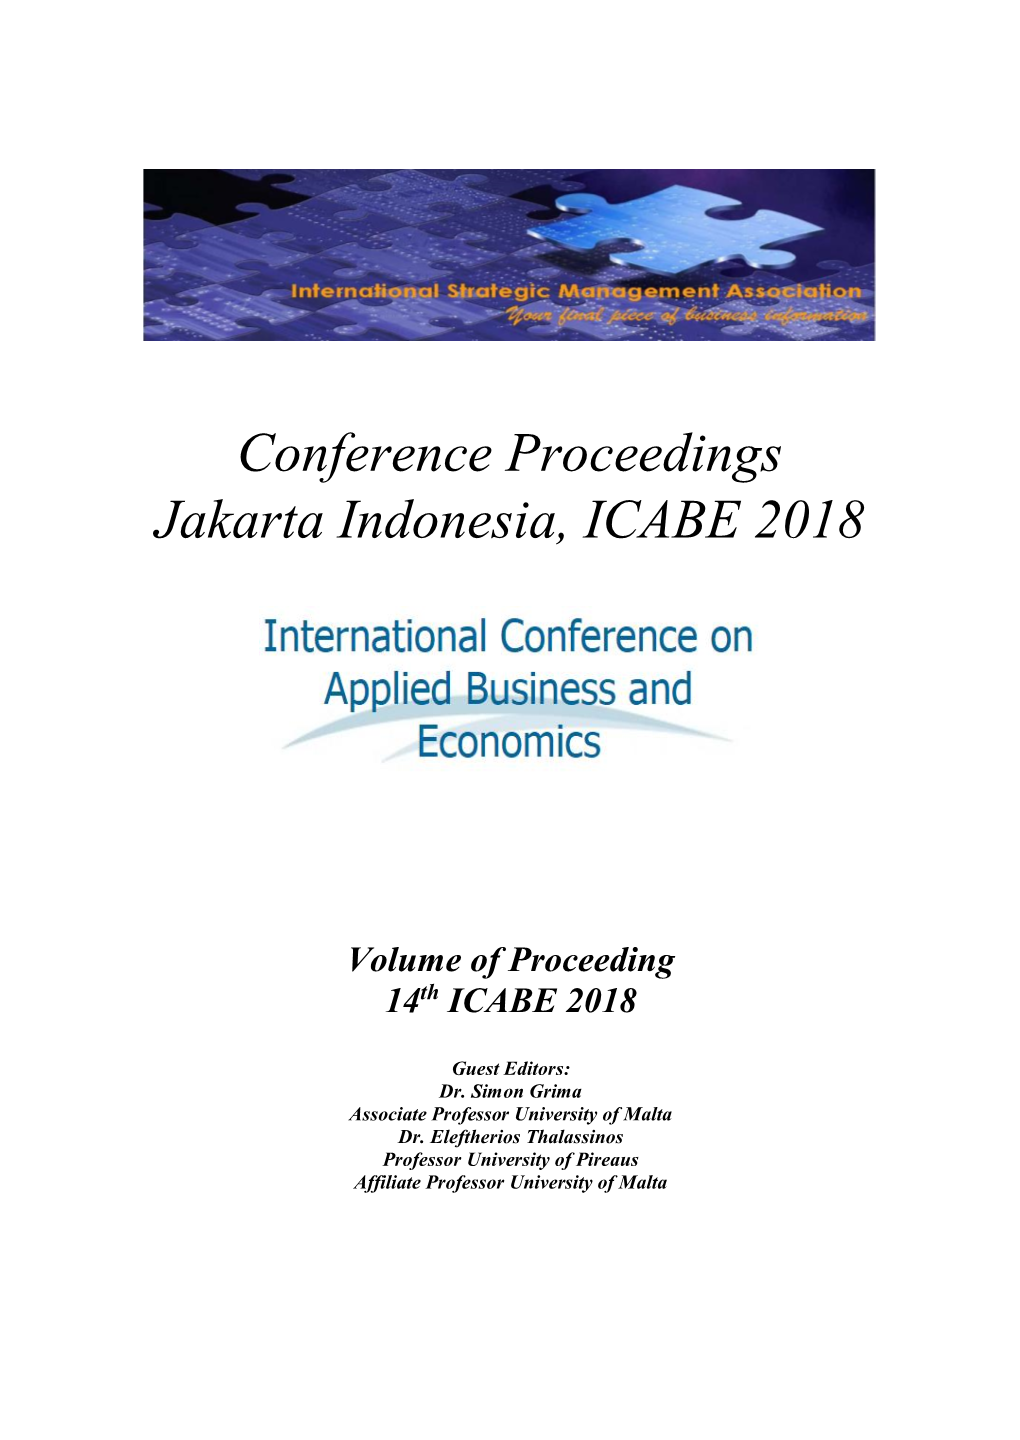 Conference Proceedings Jakarta Indonesia, ICABE 2018